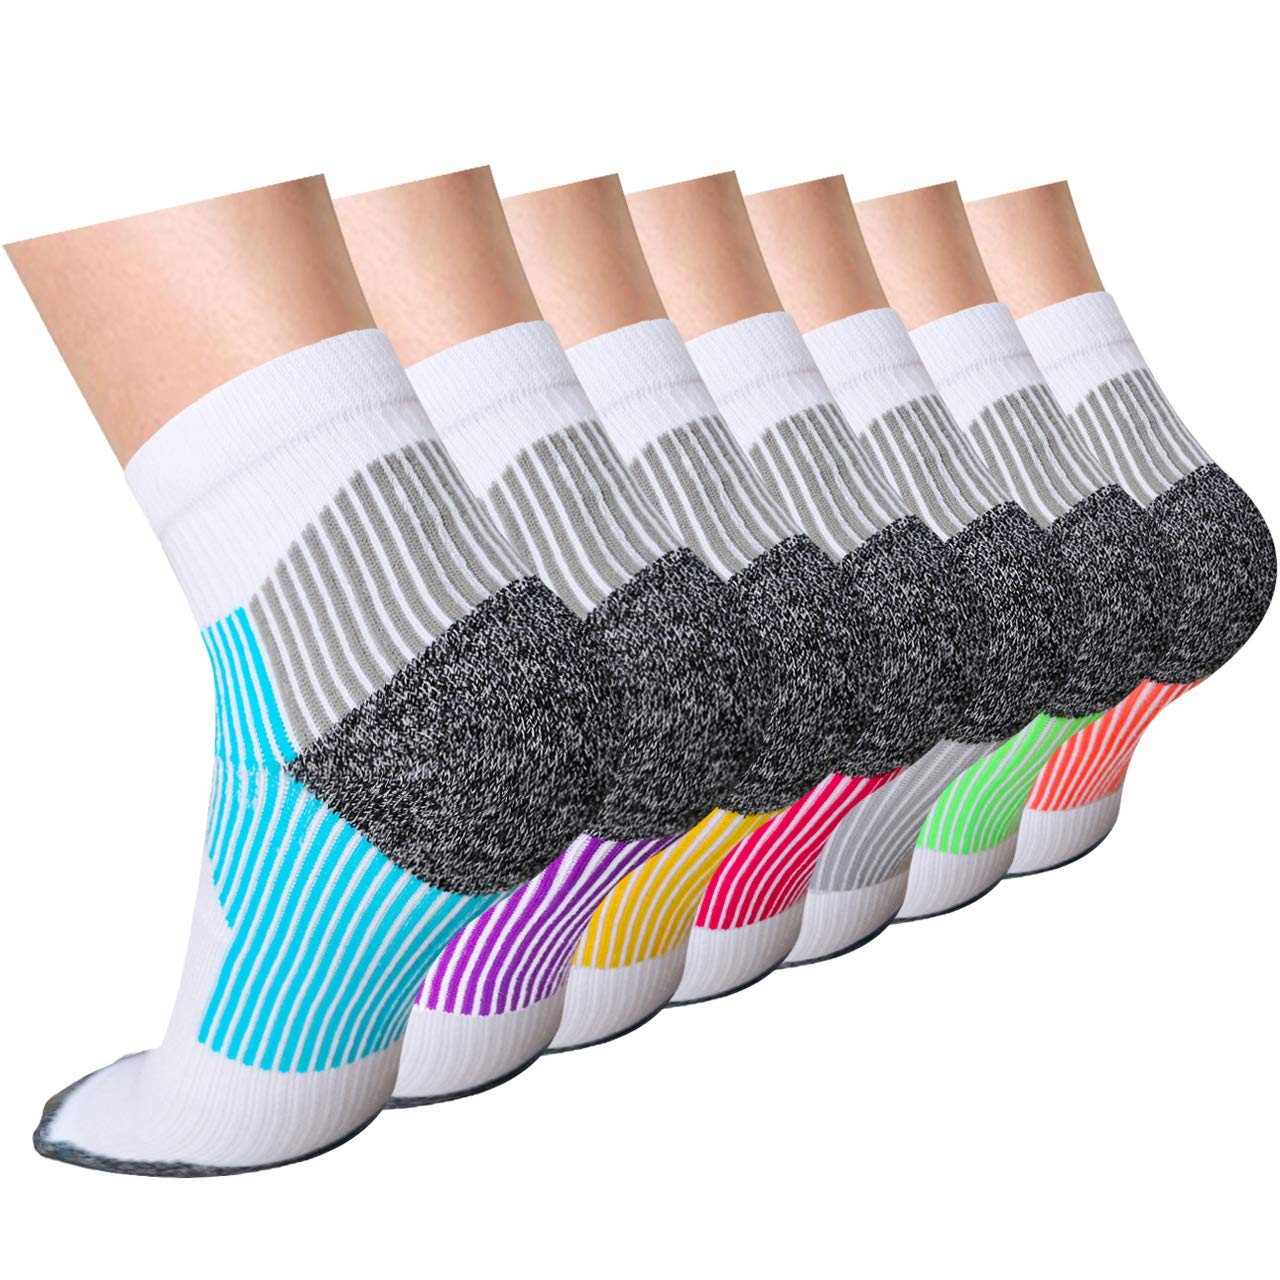 compression socks for plantar fasciitis